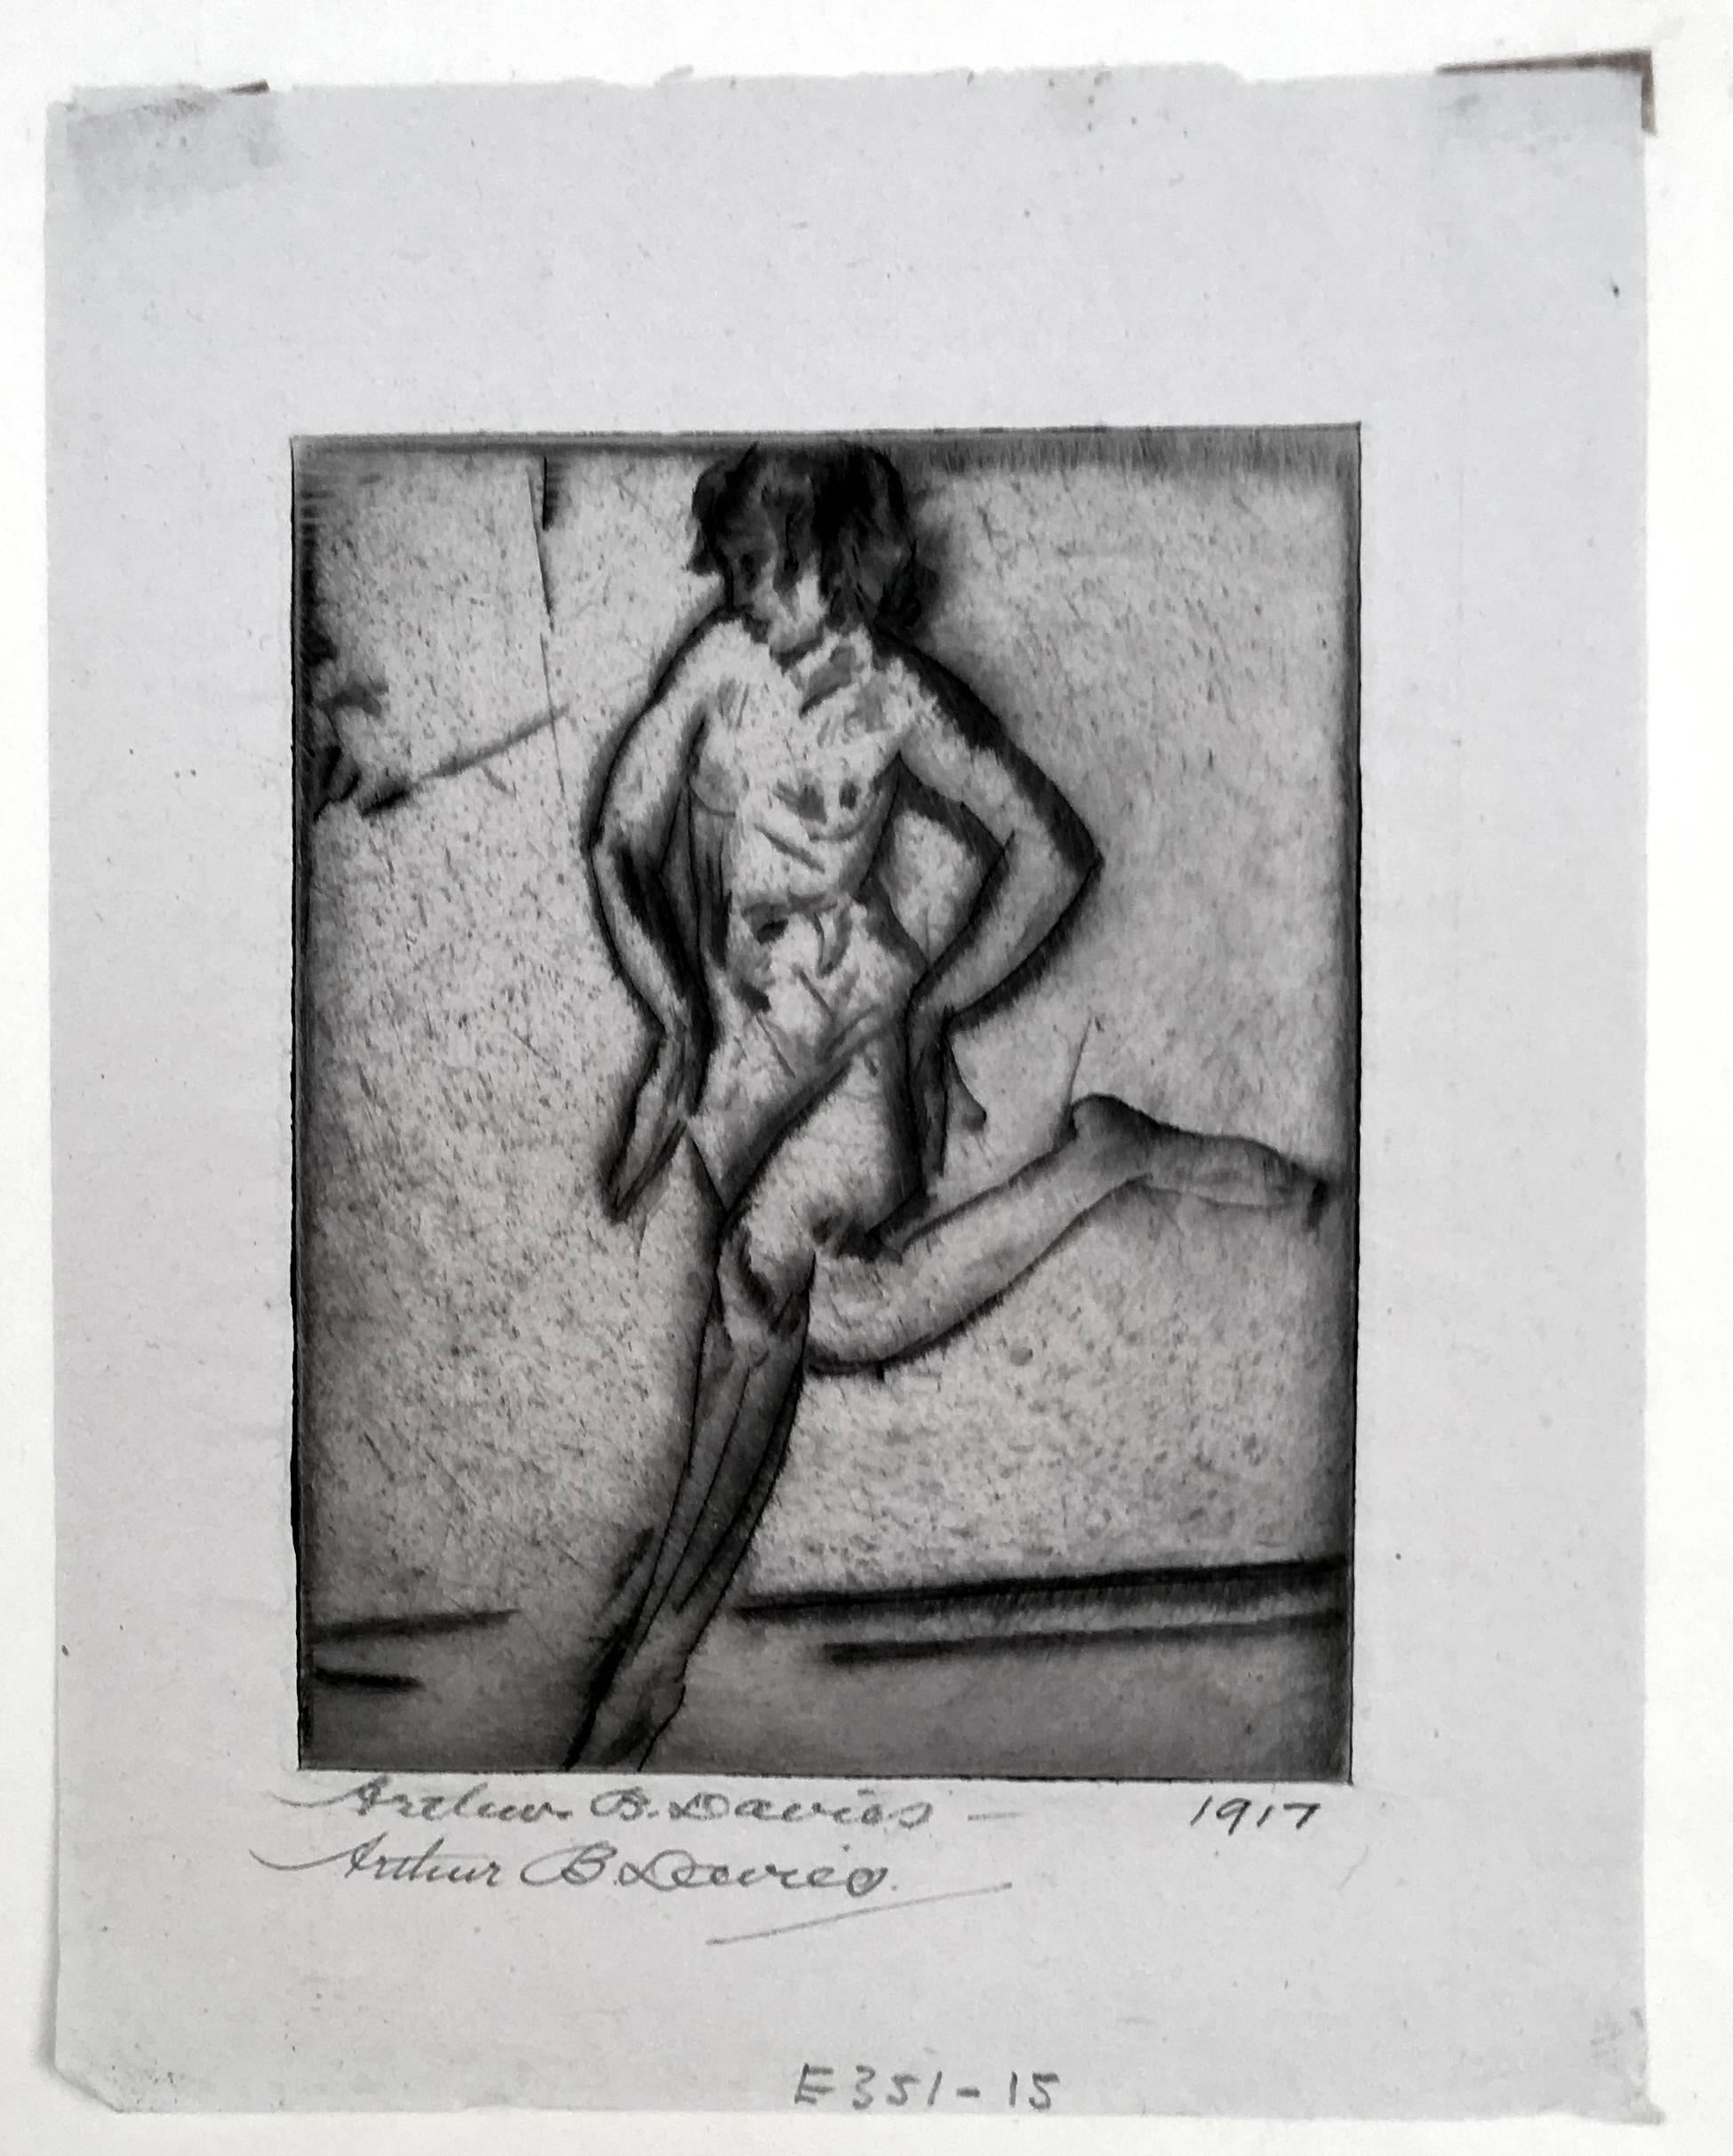 Arthur B. Davies Nude Print - Girl Running (or Woman Running)